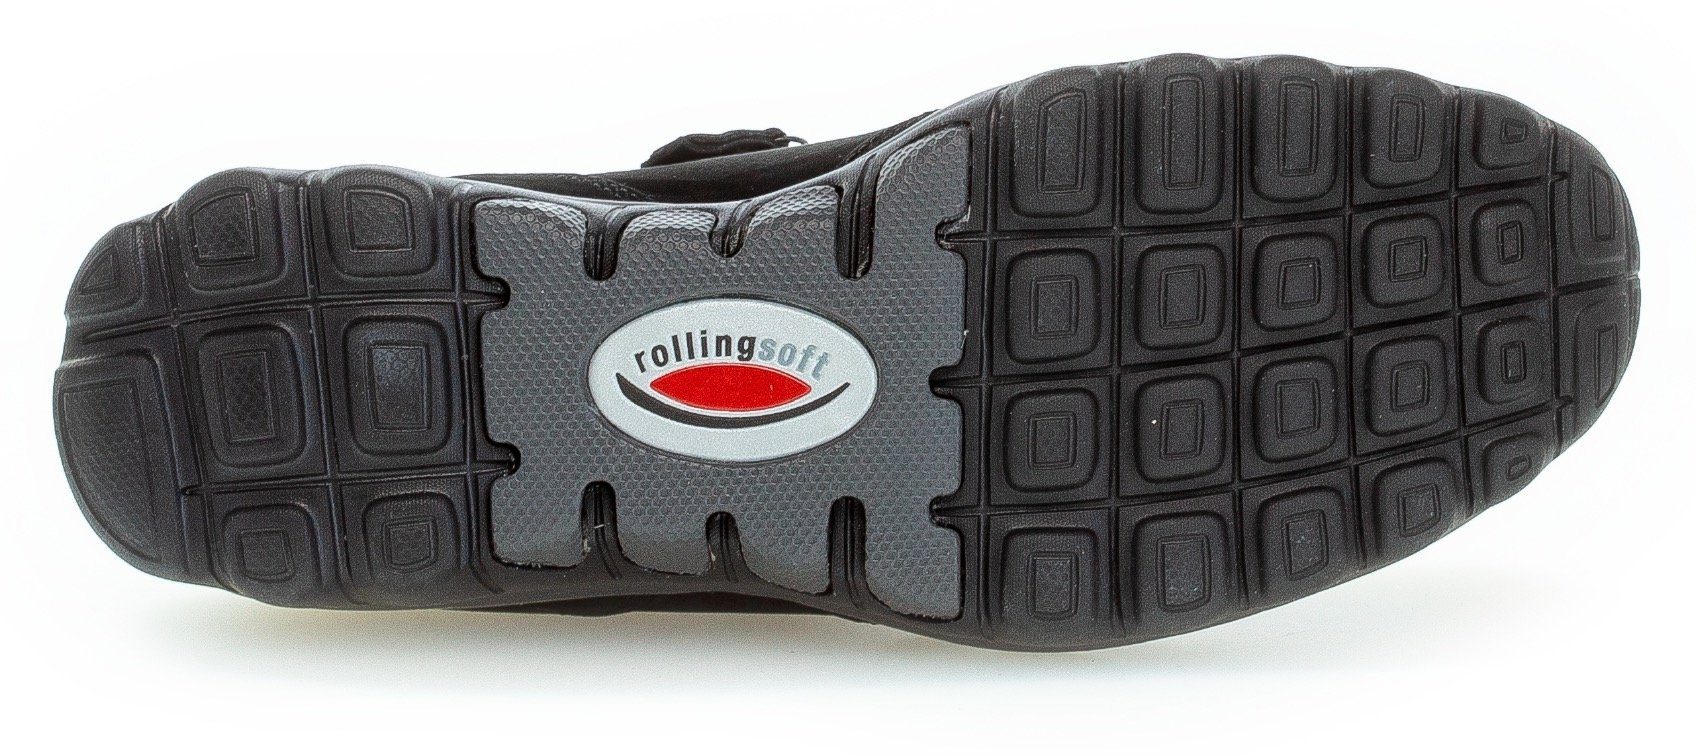 herausnehmbarem OPTIFIT-Wechselfußbett mit Rollingsoft Sneaker Gabor schwarz